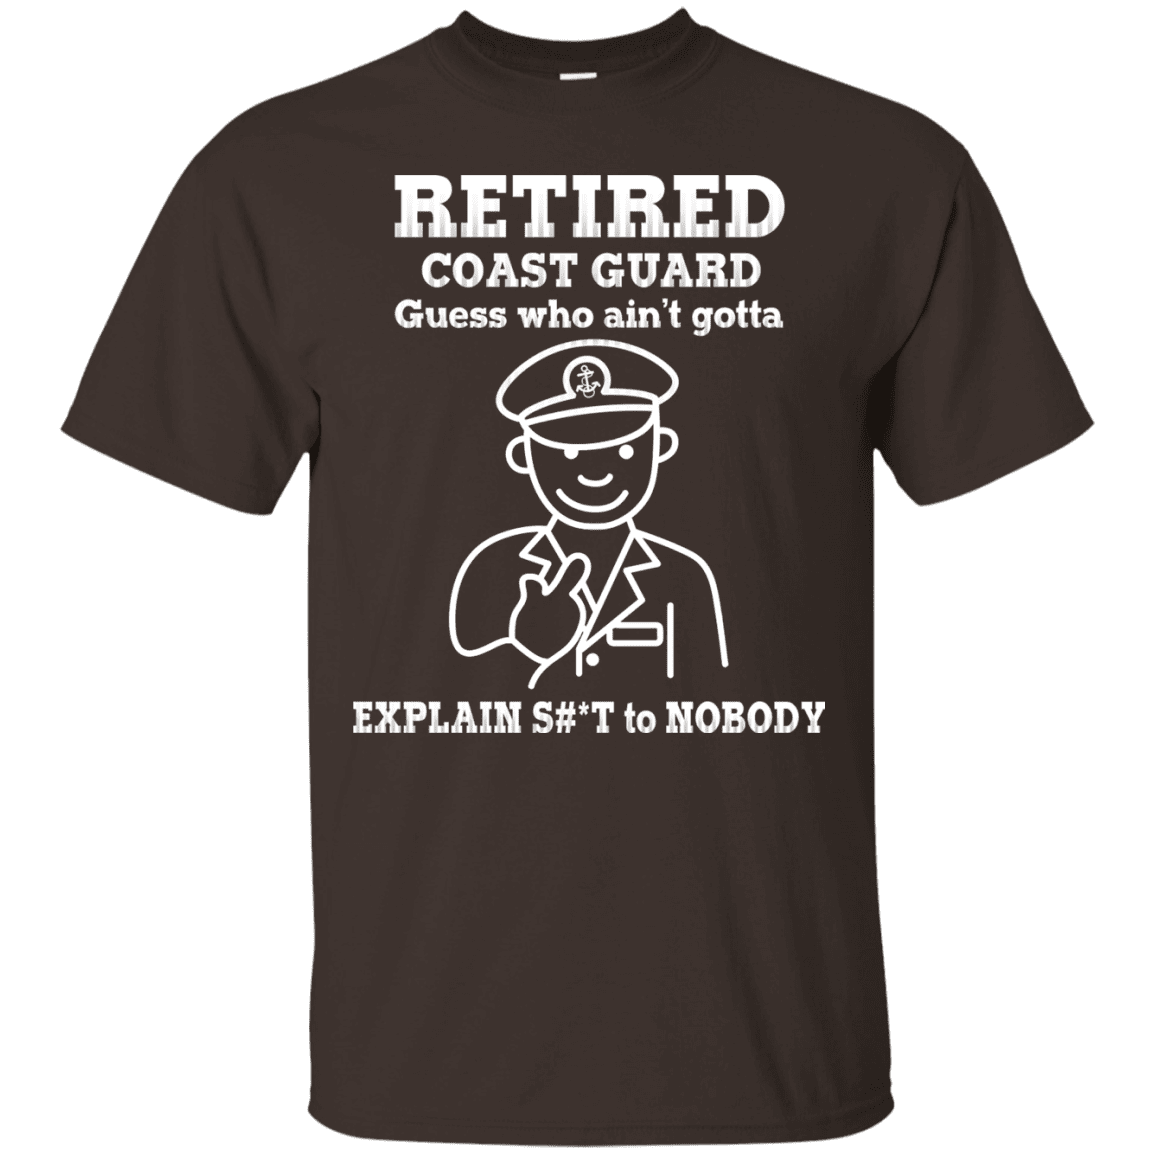 Retired Coast Guard Corps Guess Who Ain't gotta Explain Men Front T Shirts-TShirt-USCG-Veterans Nation